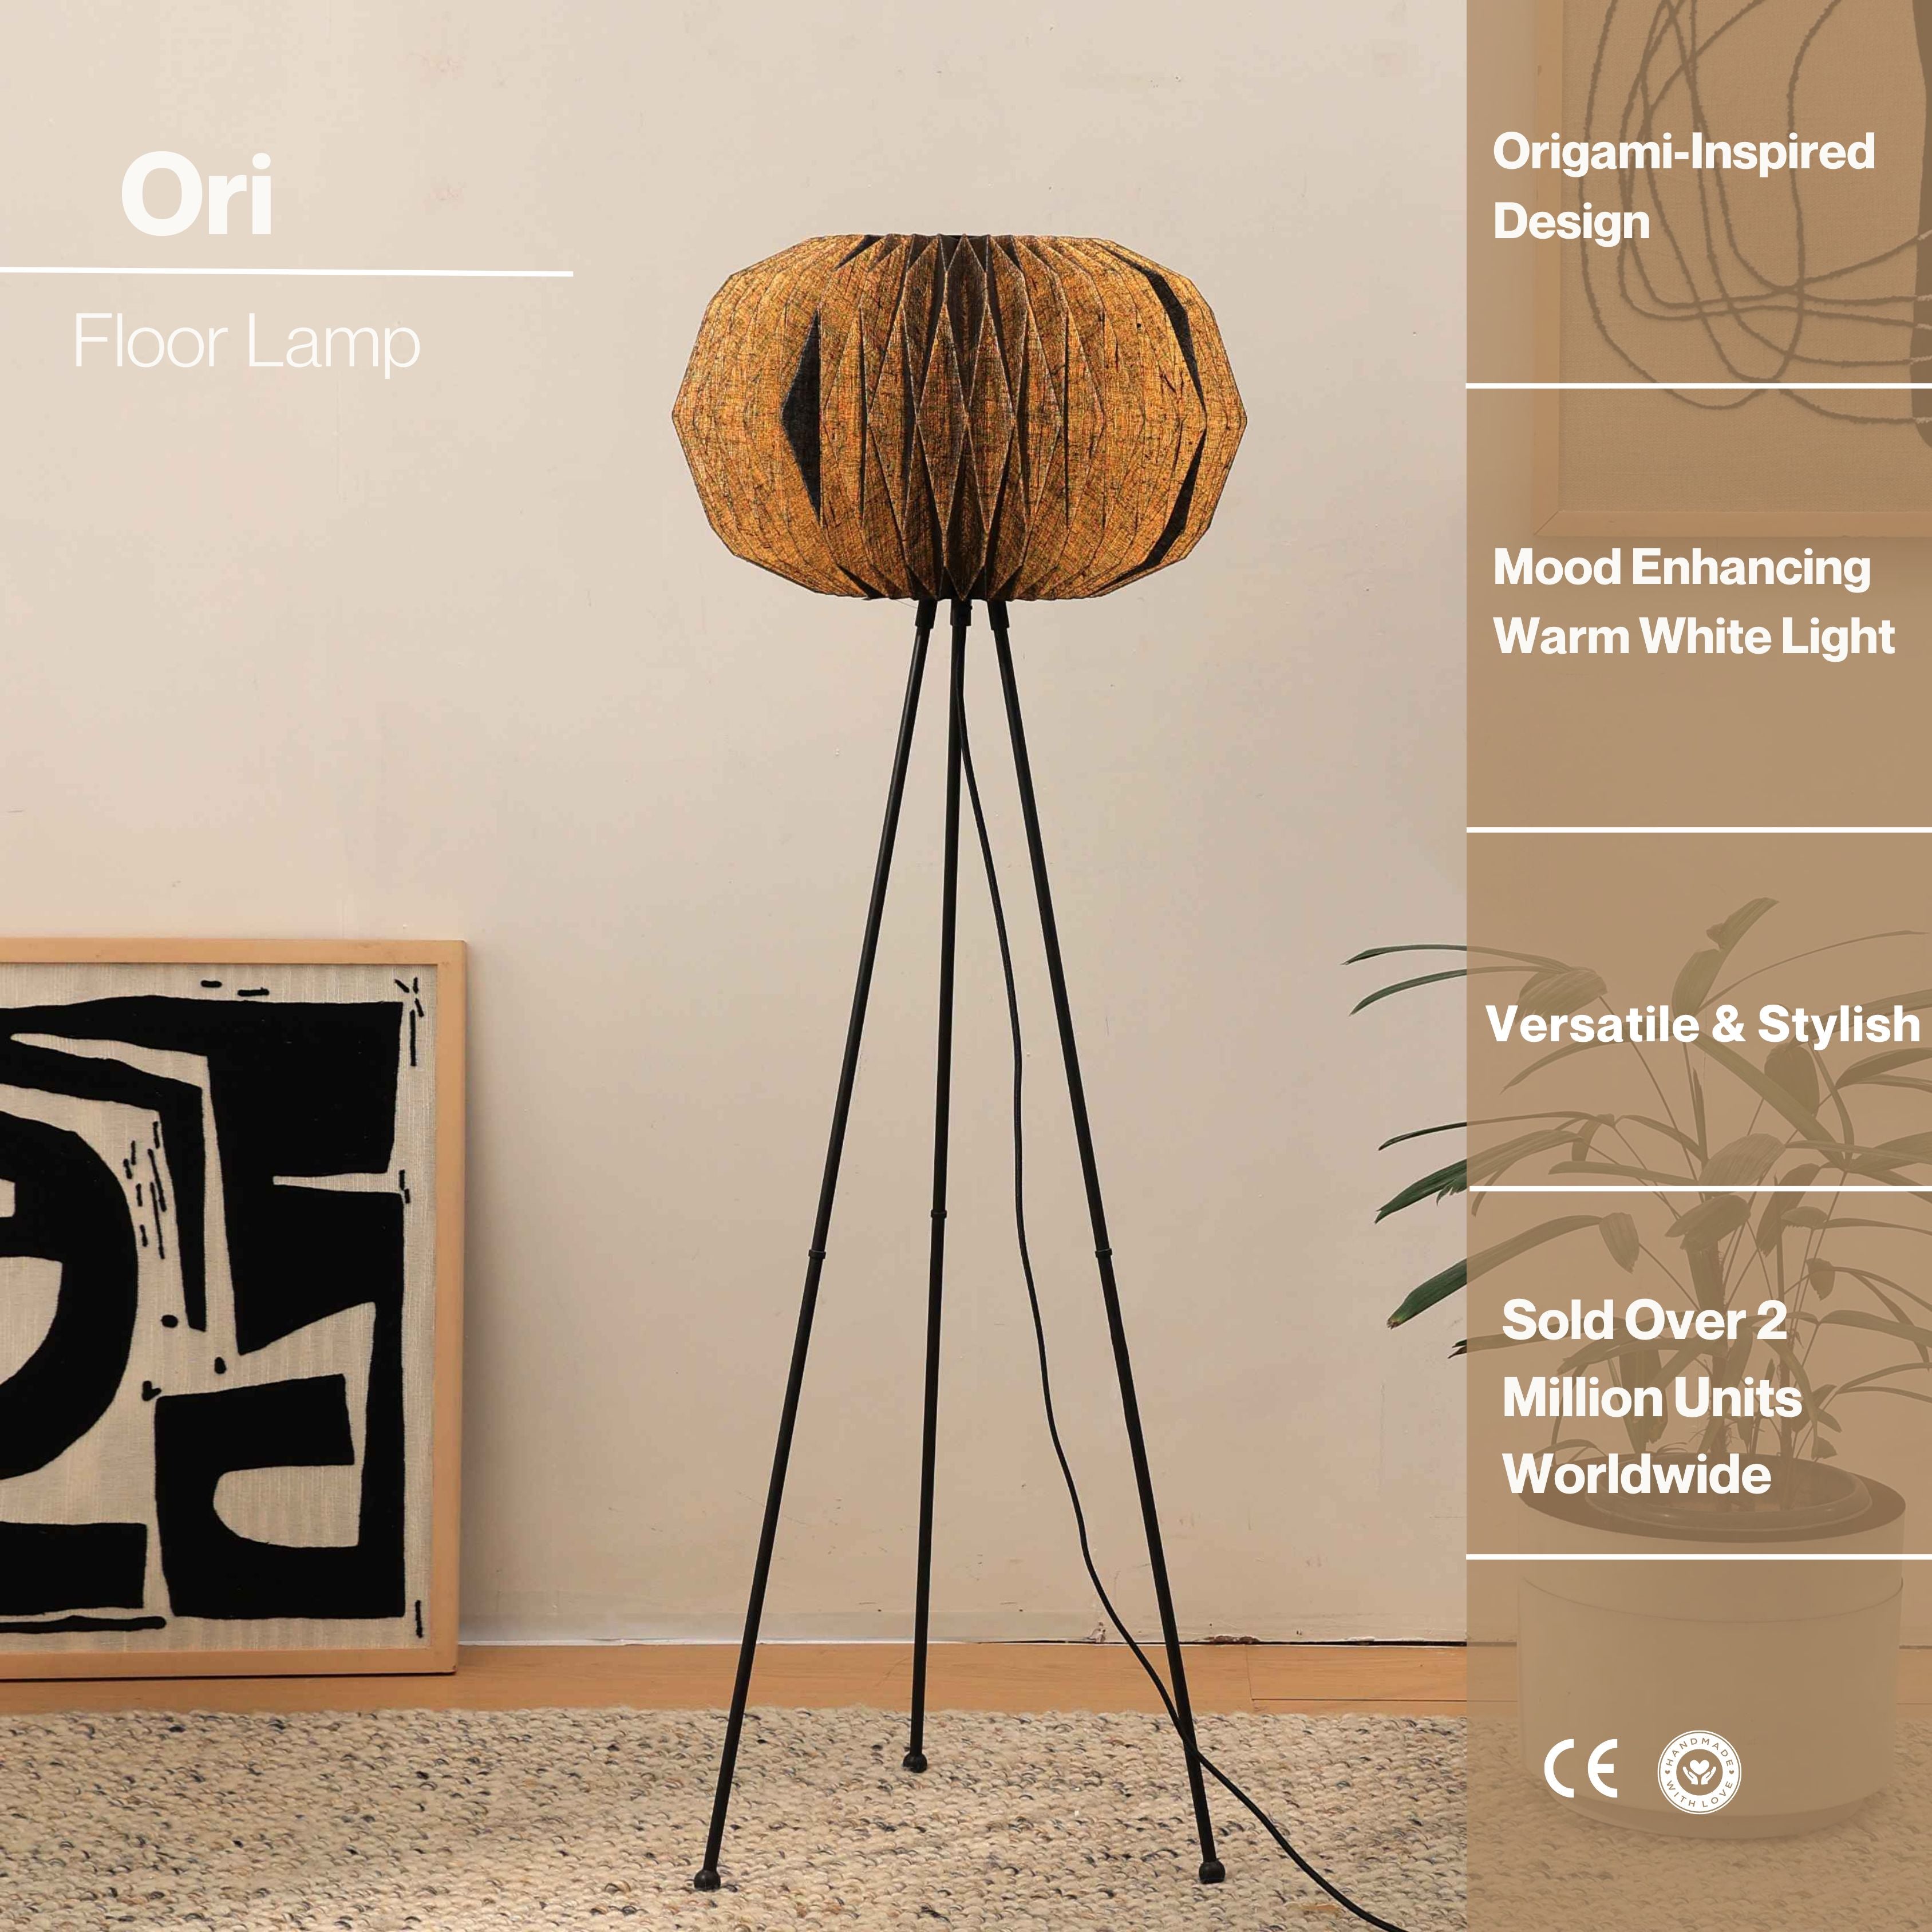 Ori Floor Lamp - Origami, Linen Floor Light, Knock Down Tripod Standing Lamp